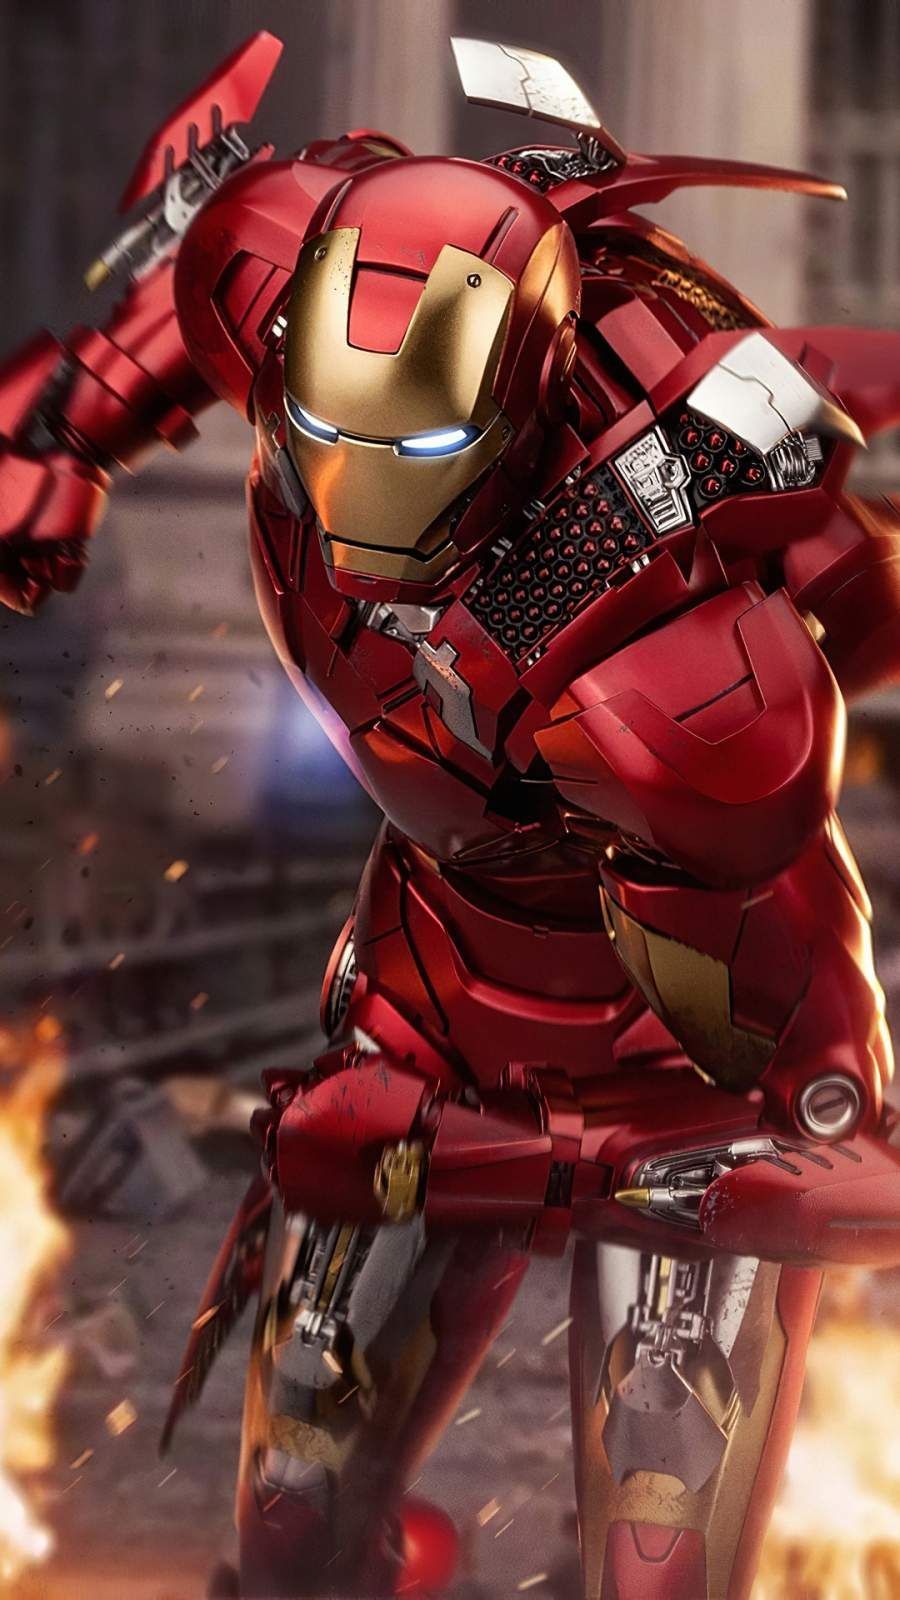 Best Iron man image. iron man, marvel iron man, marvel superheroes